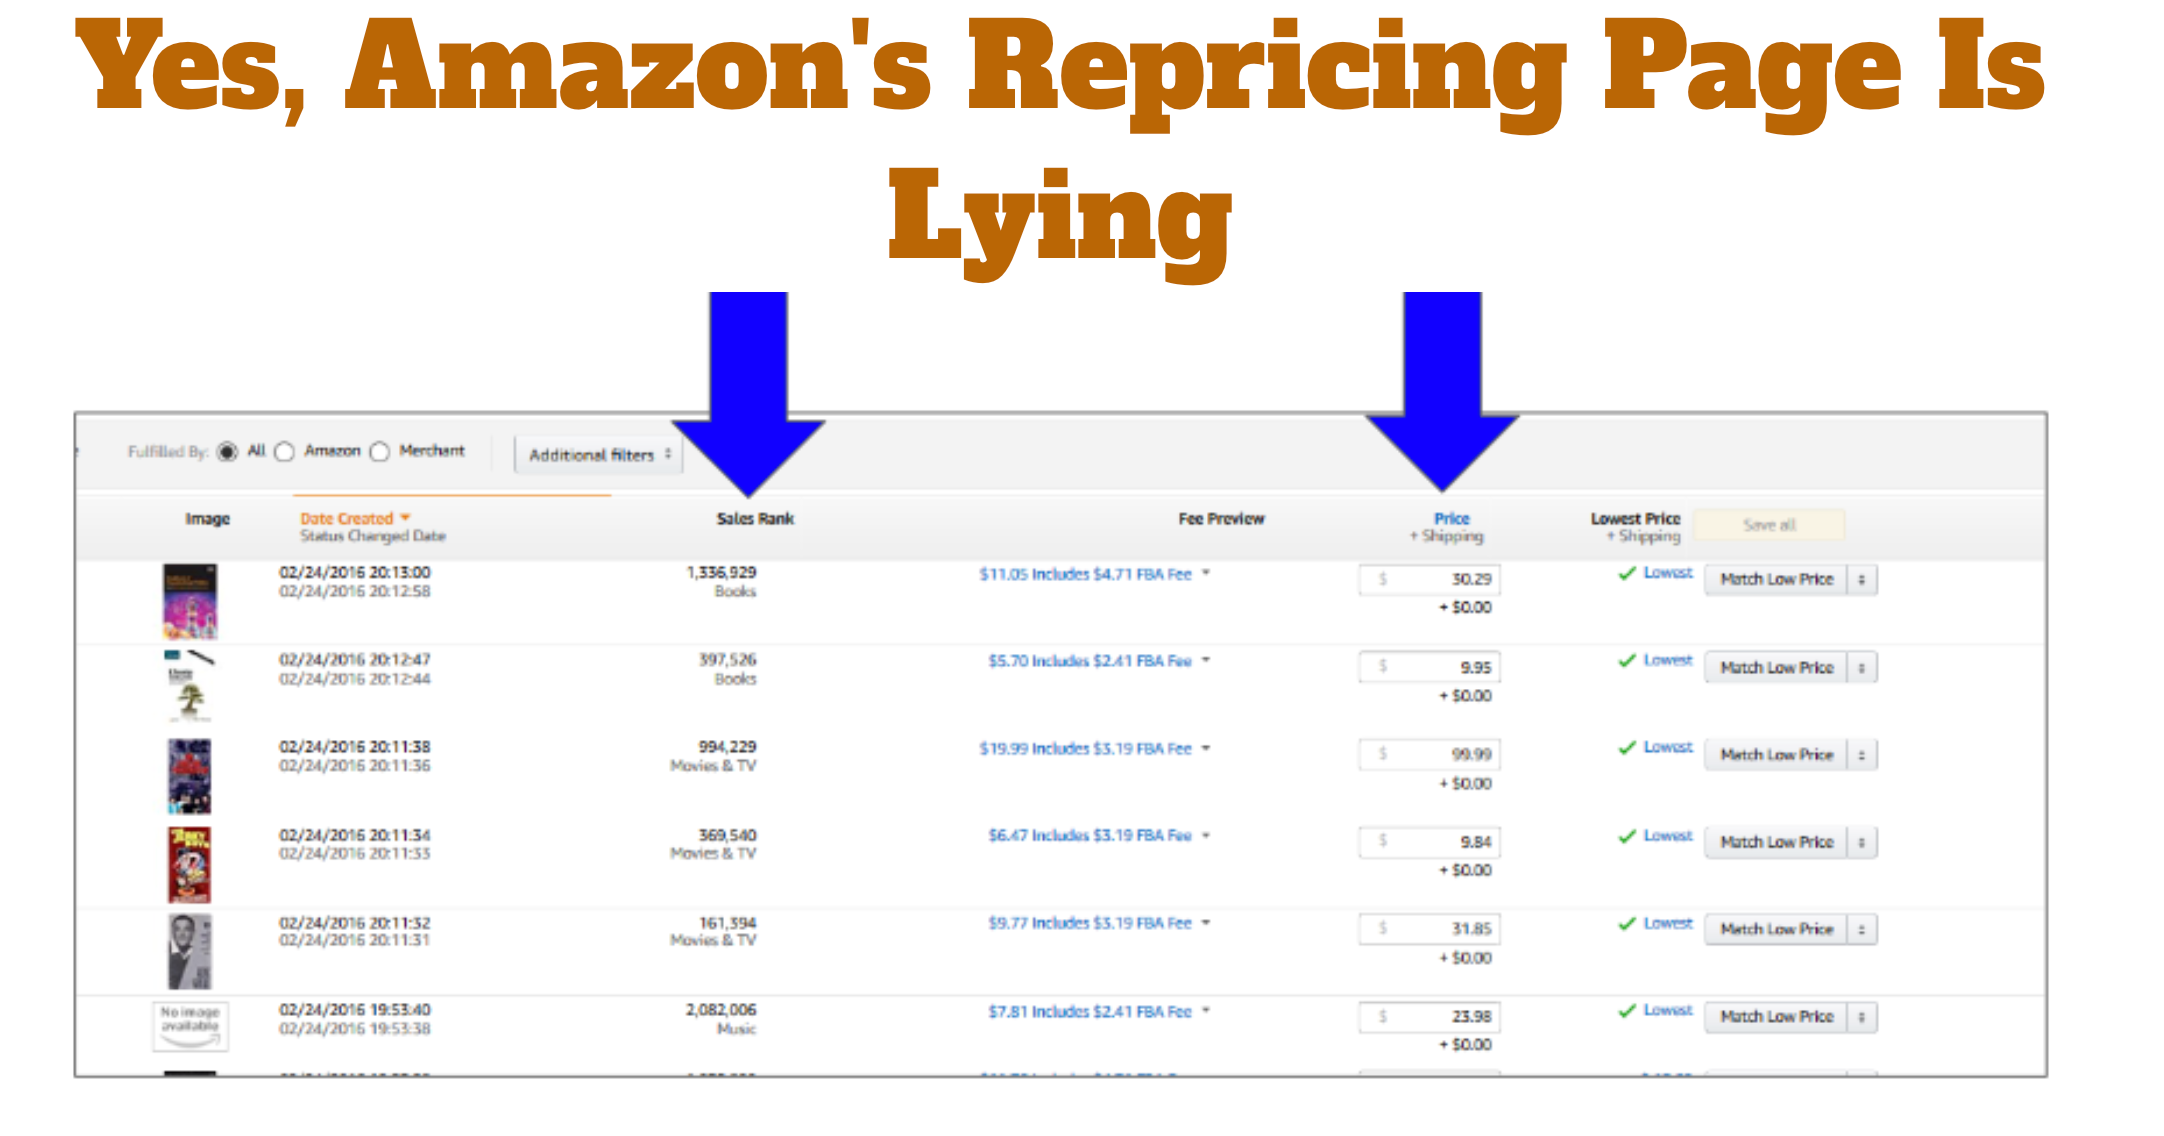 Amazon Repricing